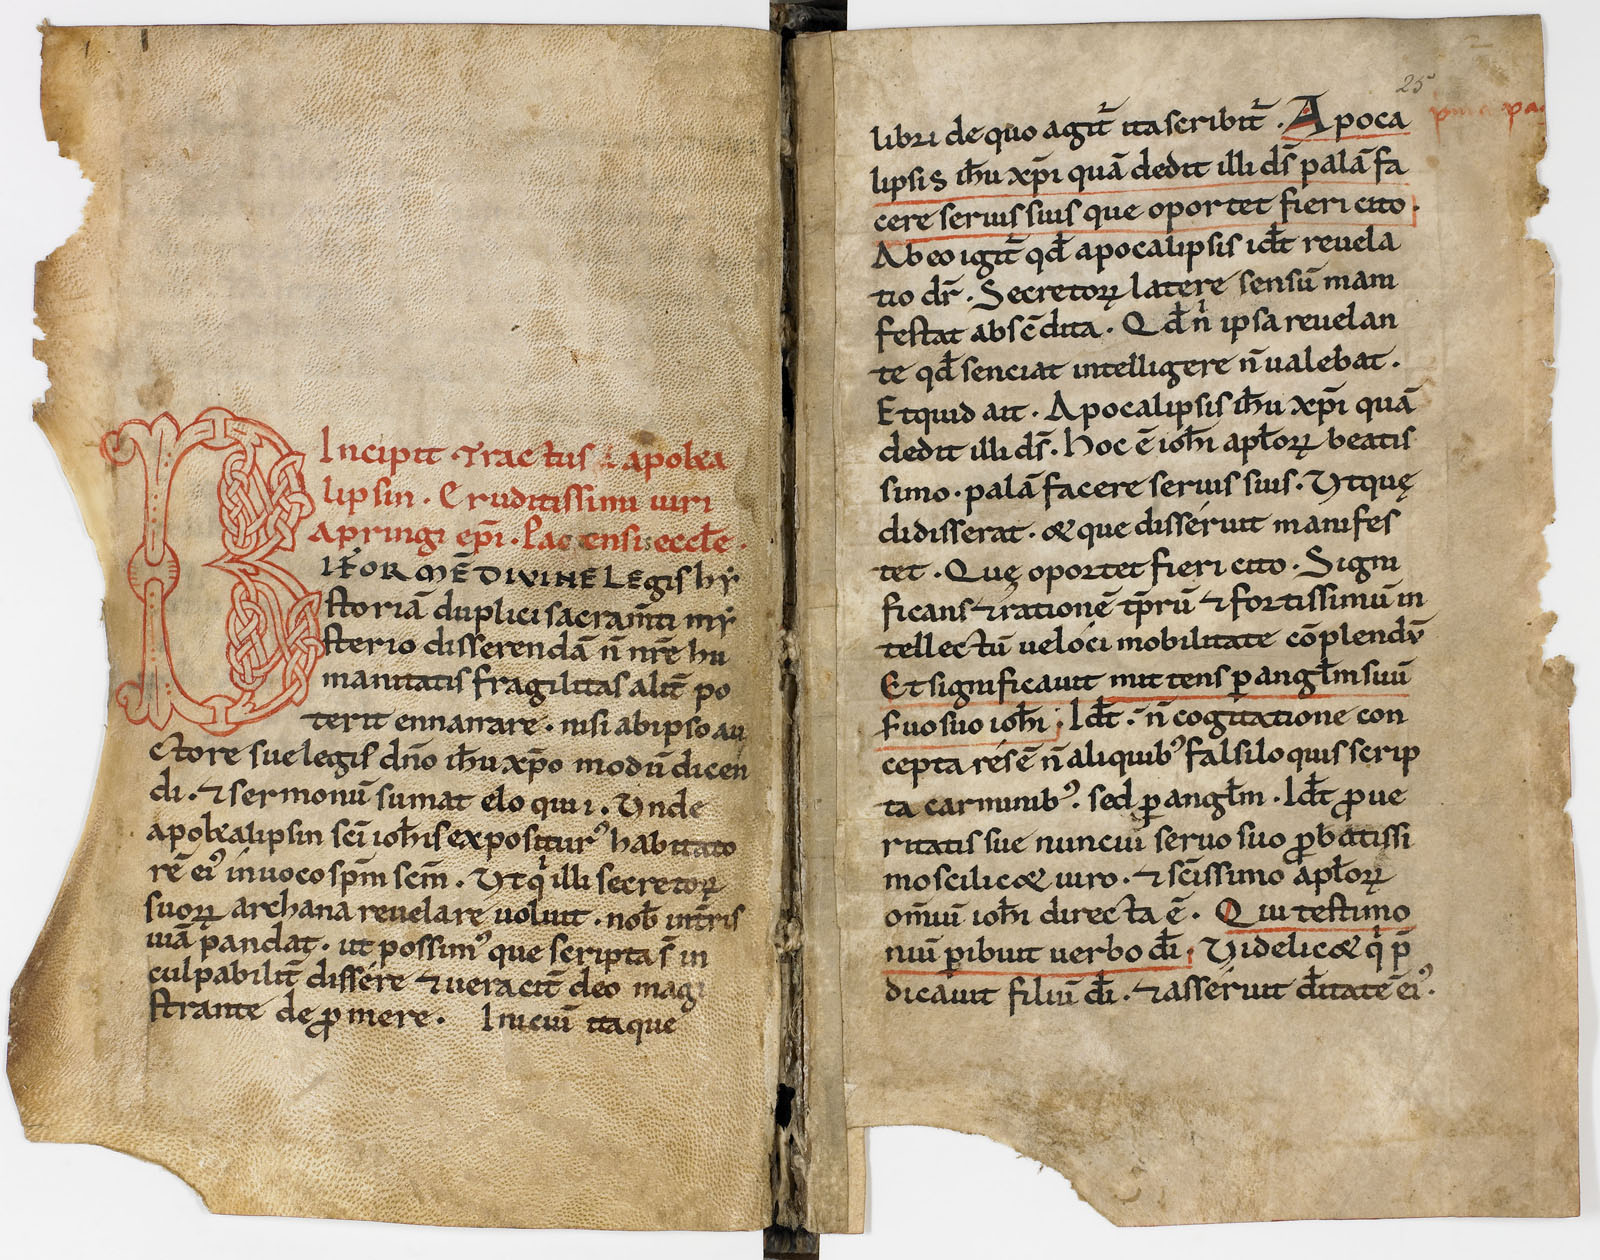 A Spanish manuscript, AM 795 4to